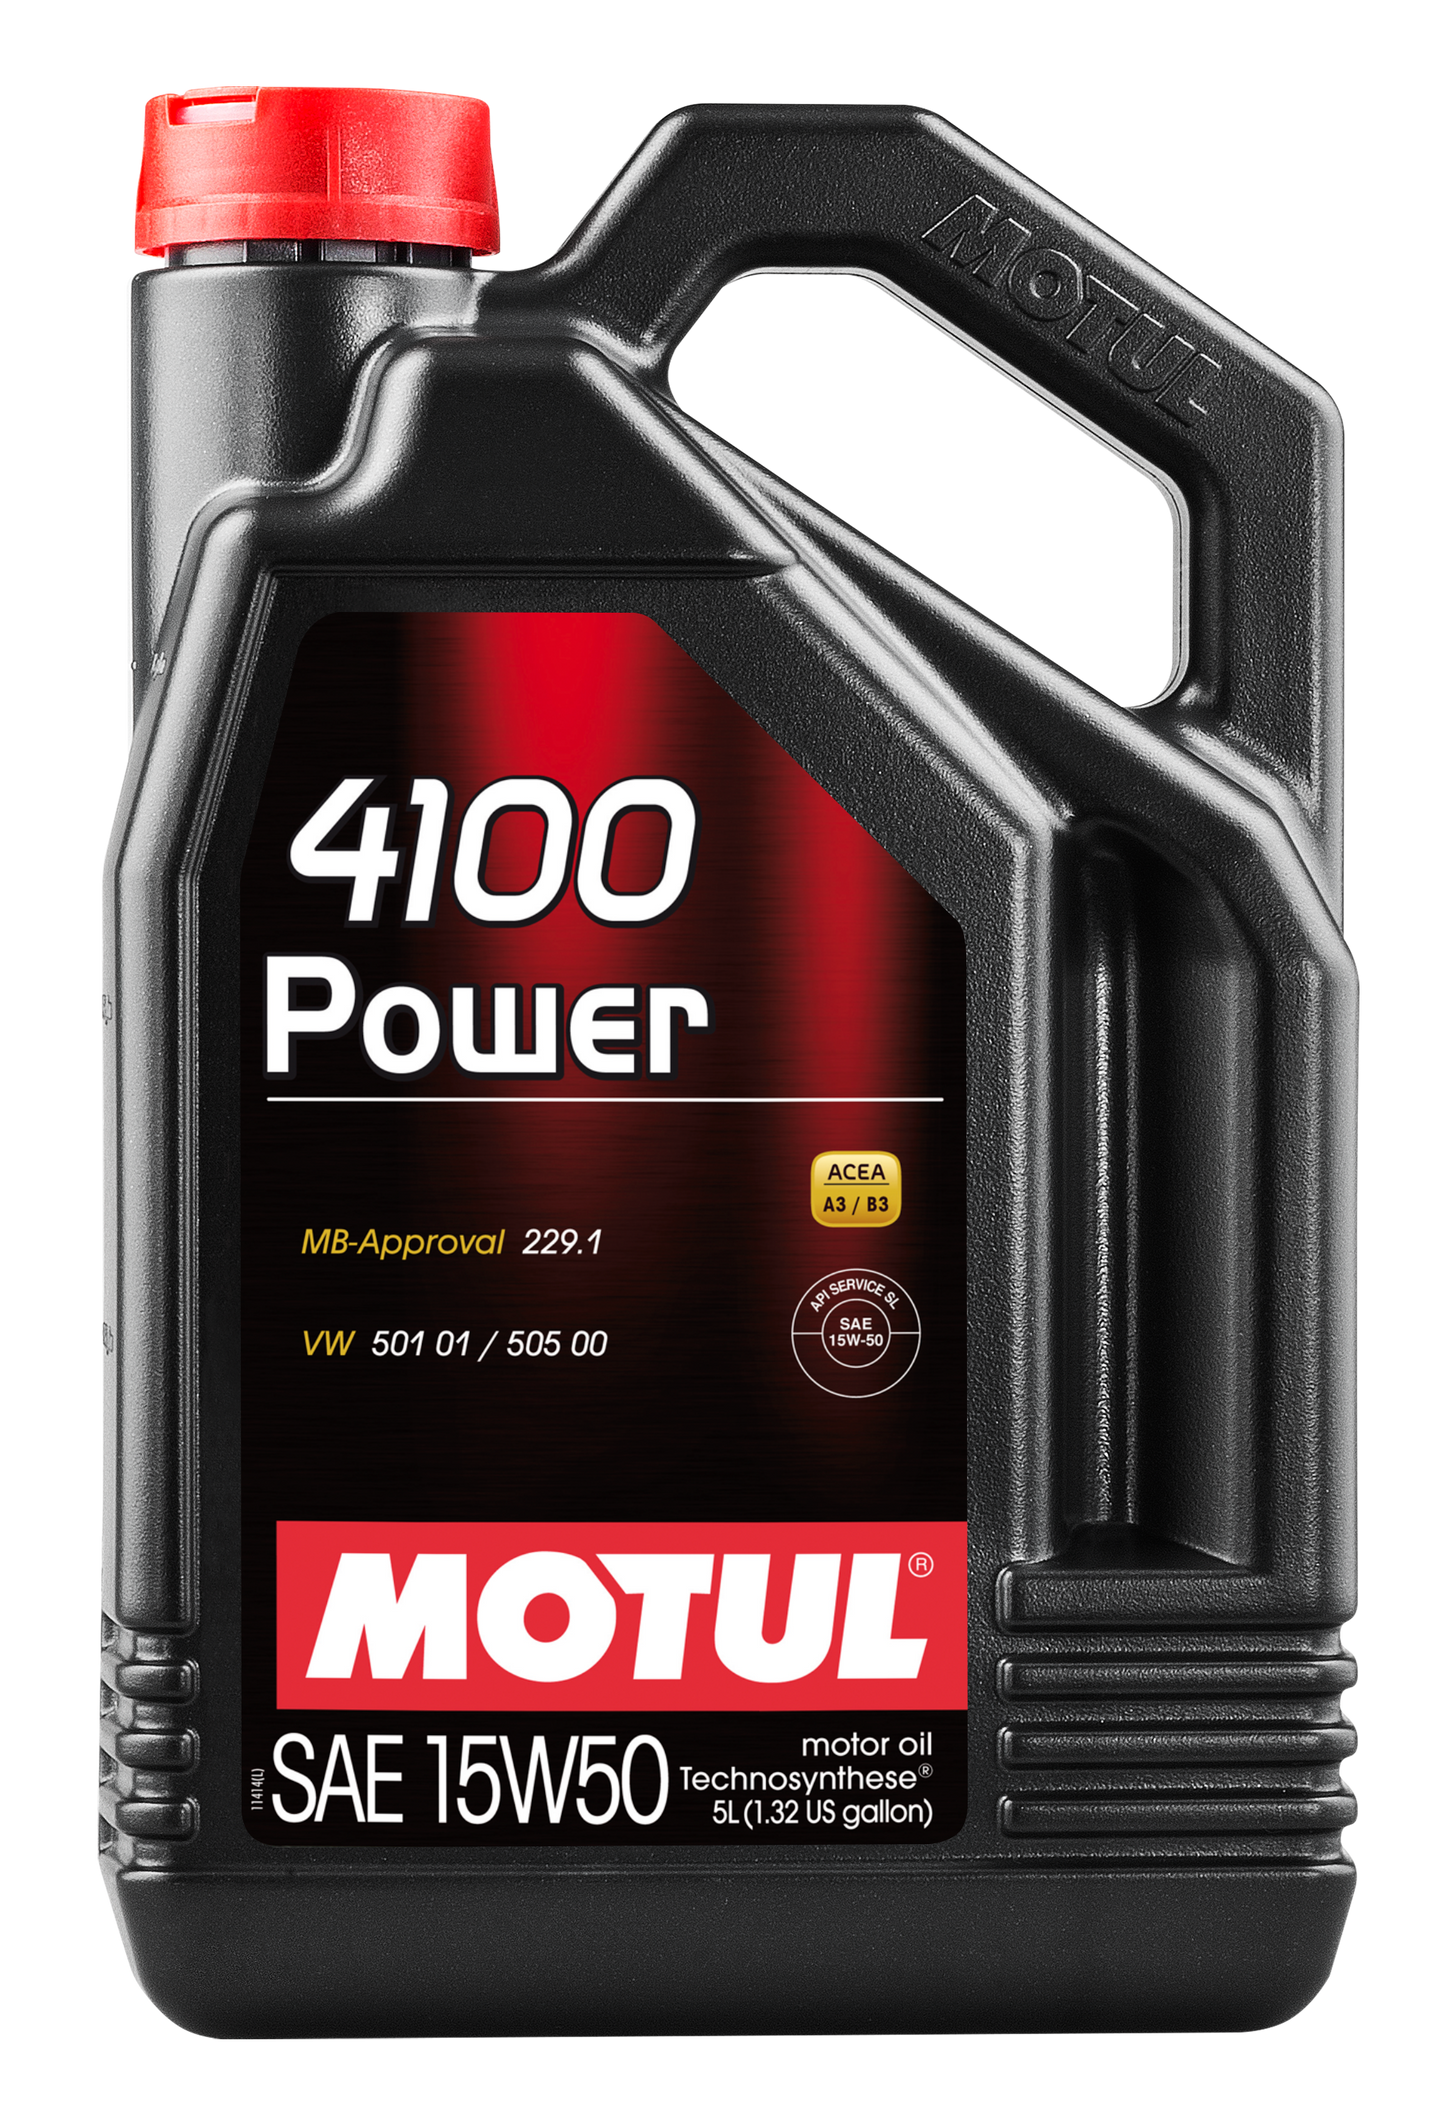 Motul 4100 POWER 15W-50, 5 liter